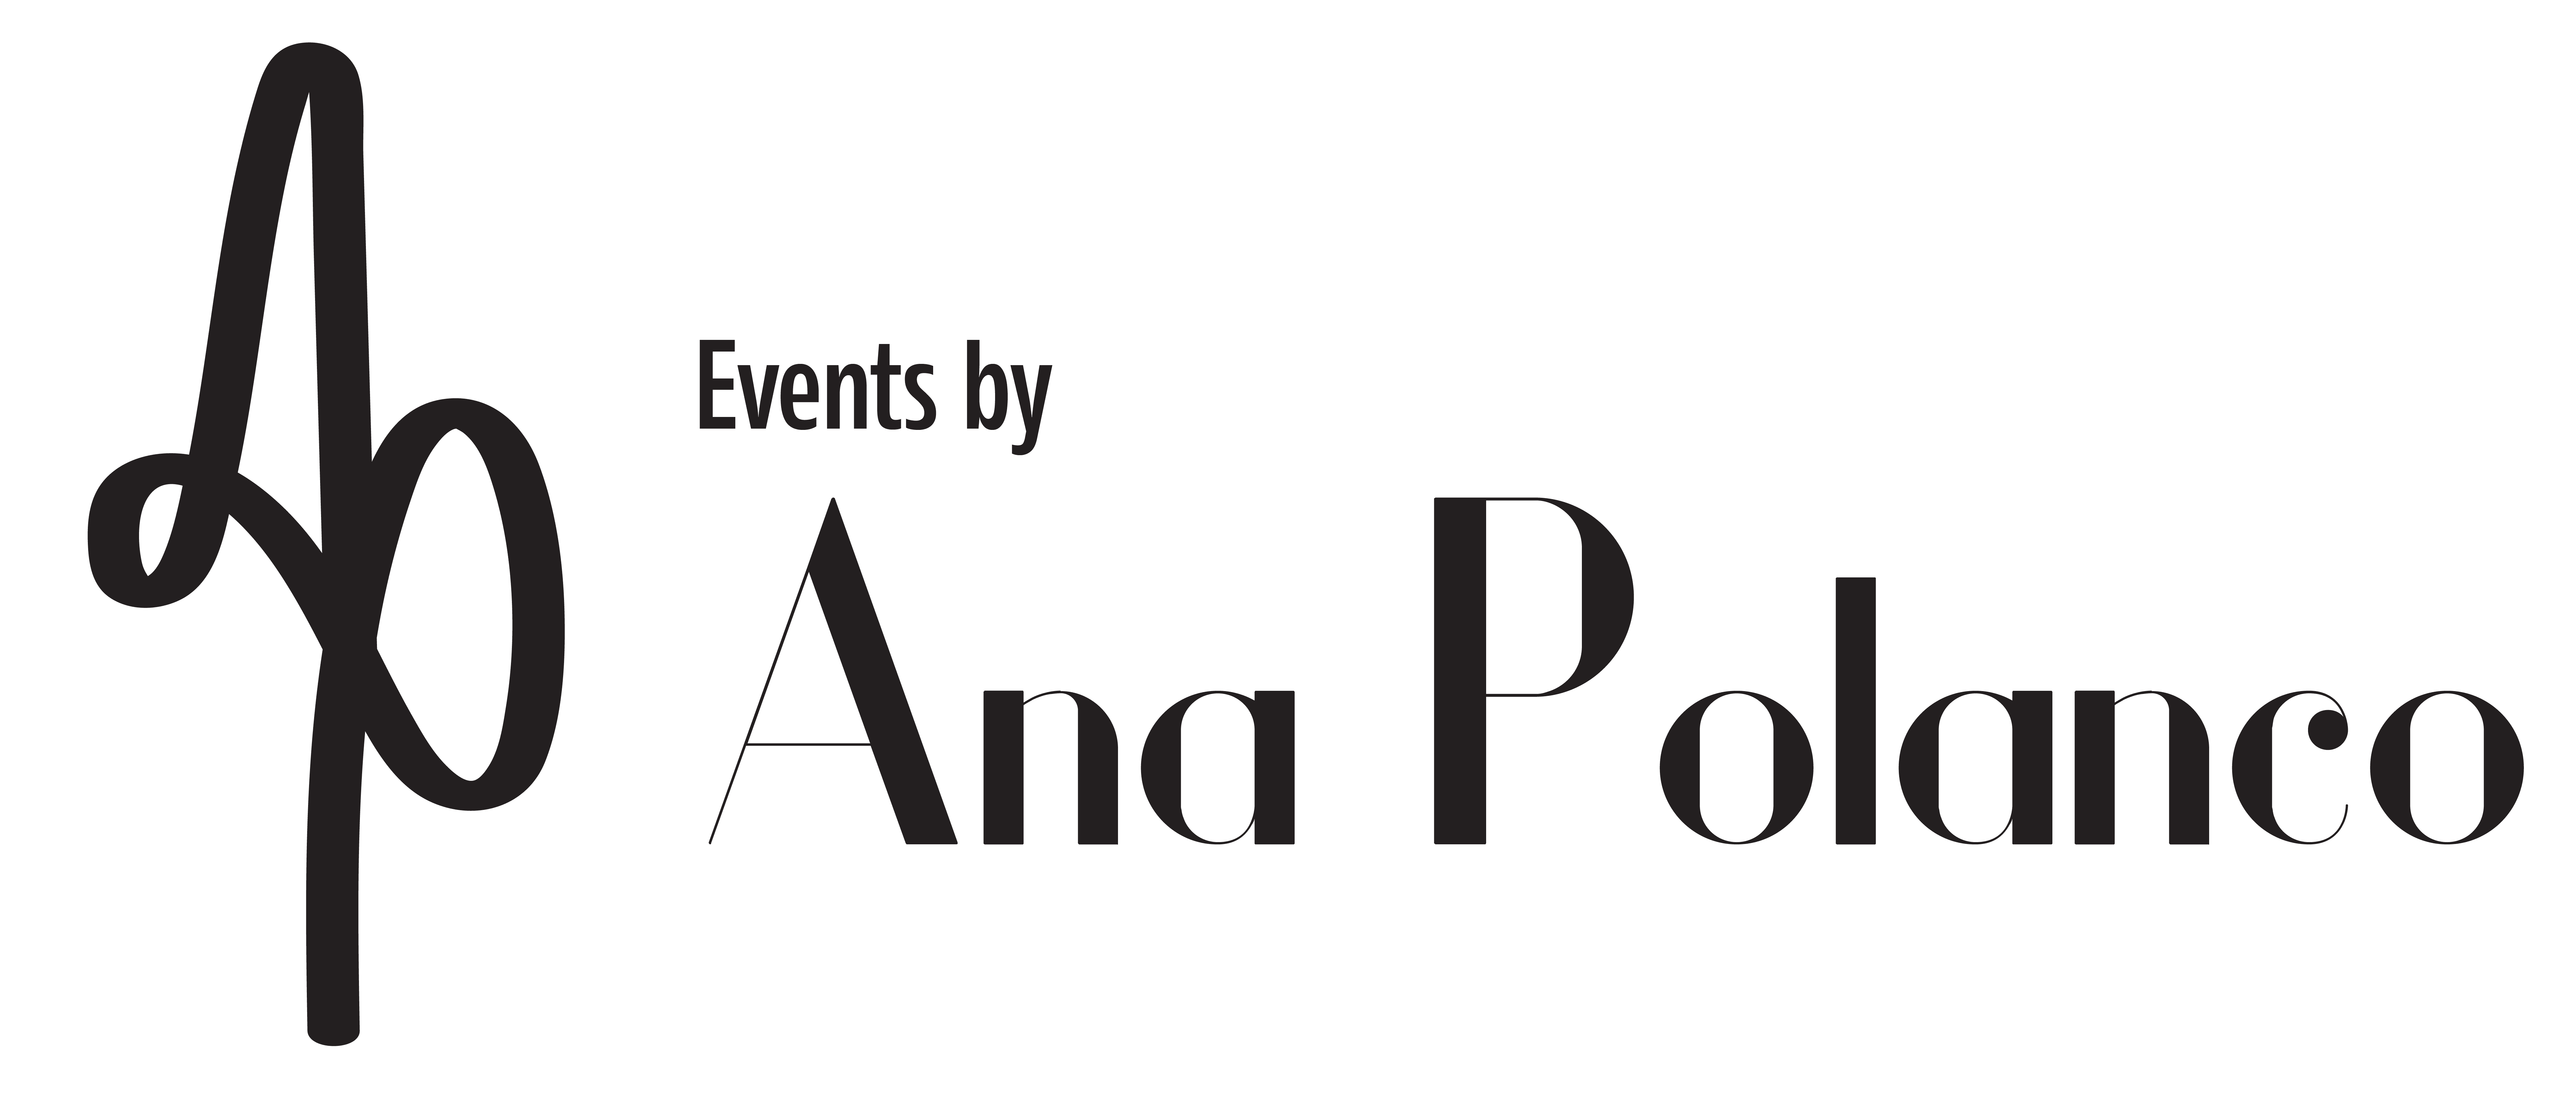 Logo events by Ana Polanco